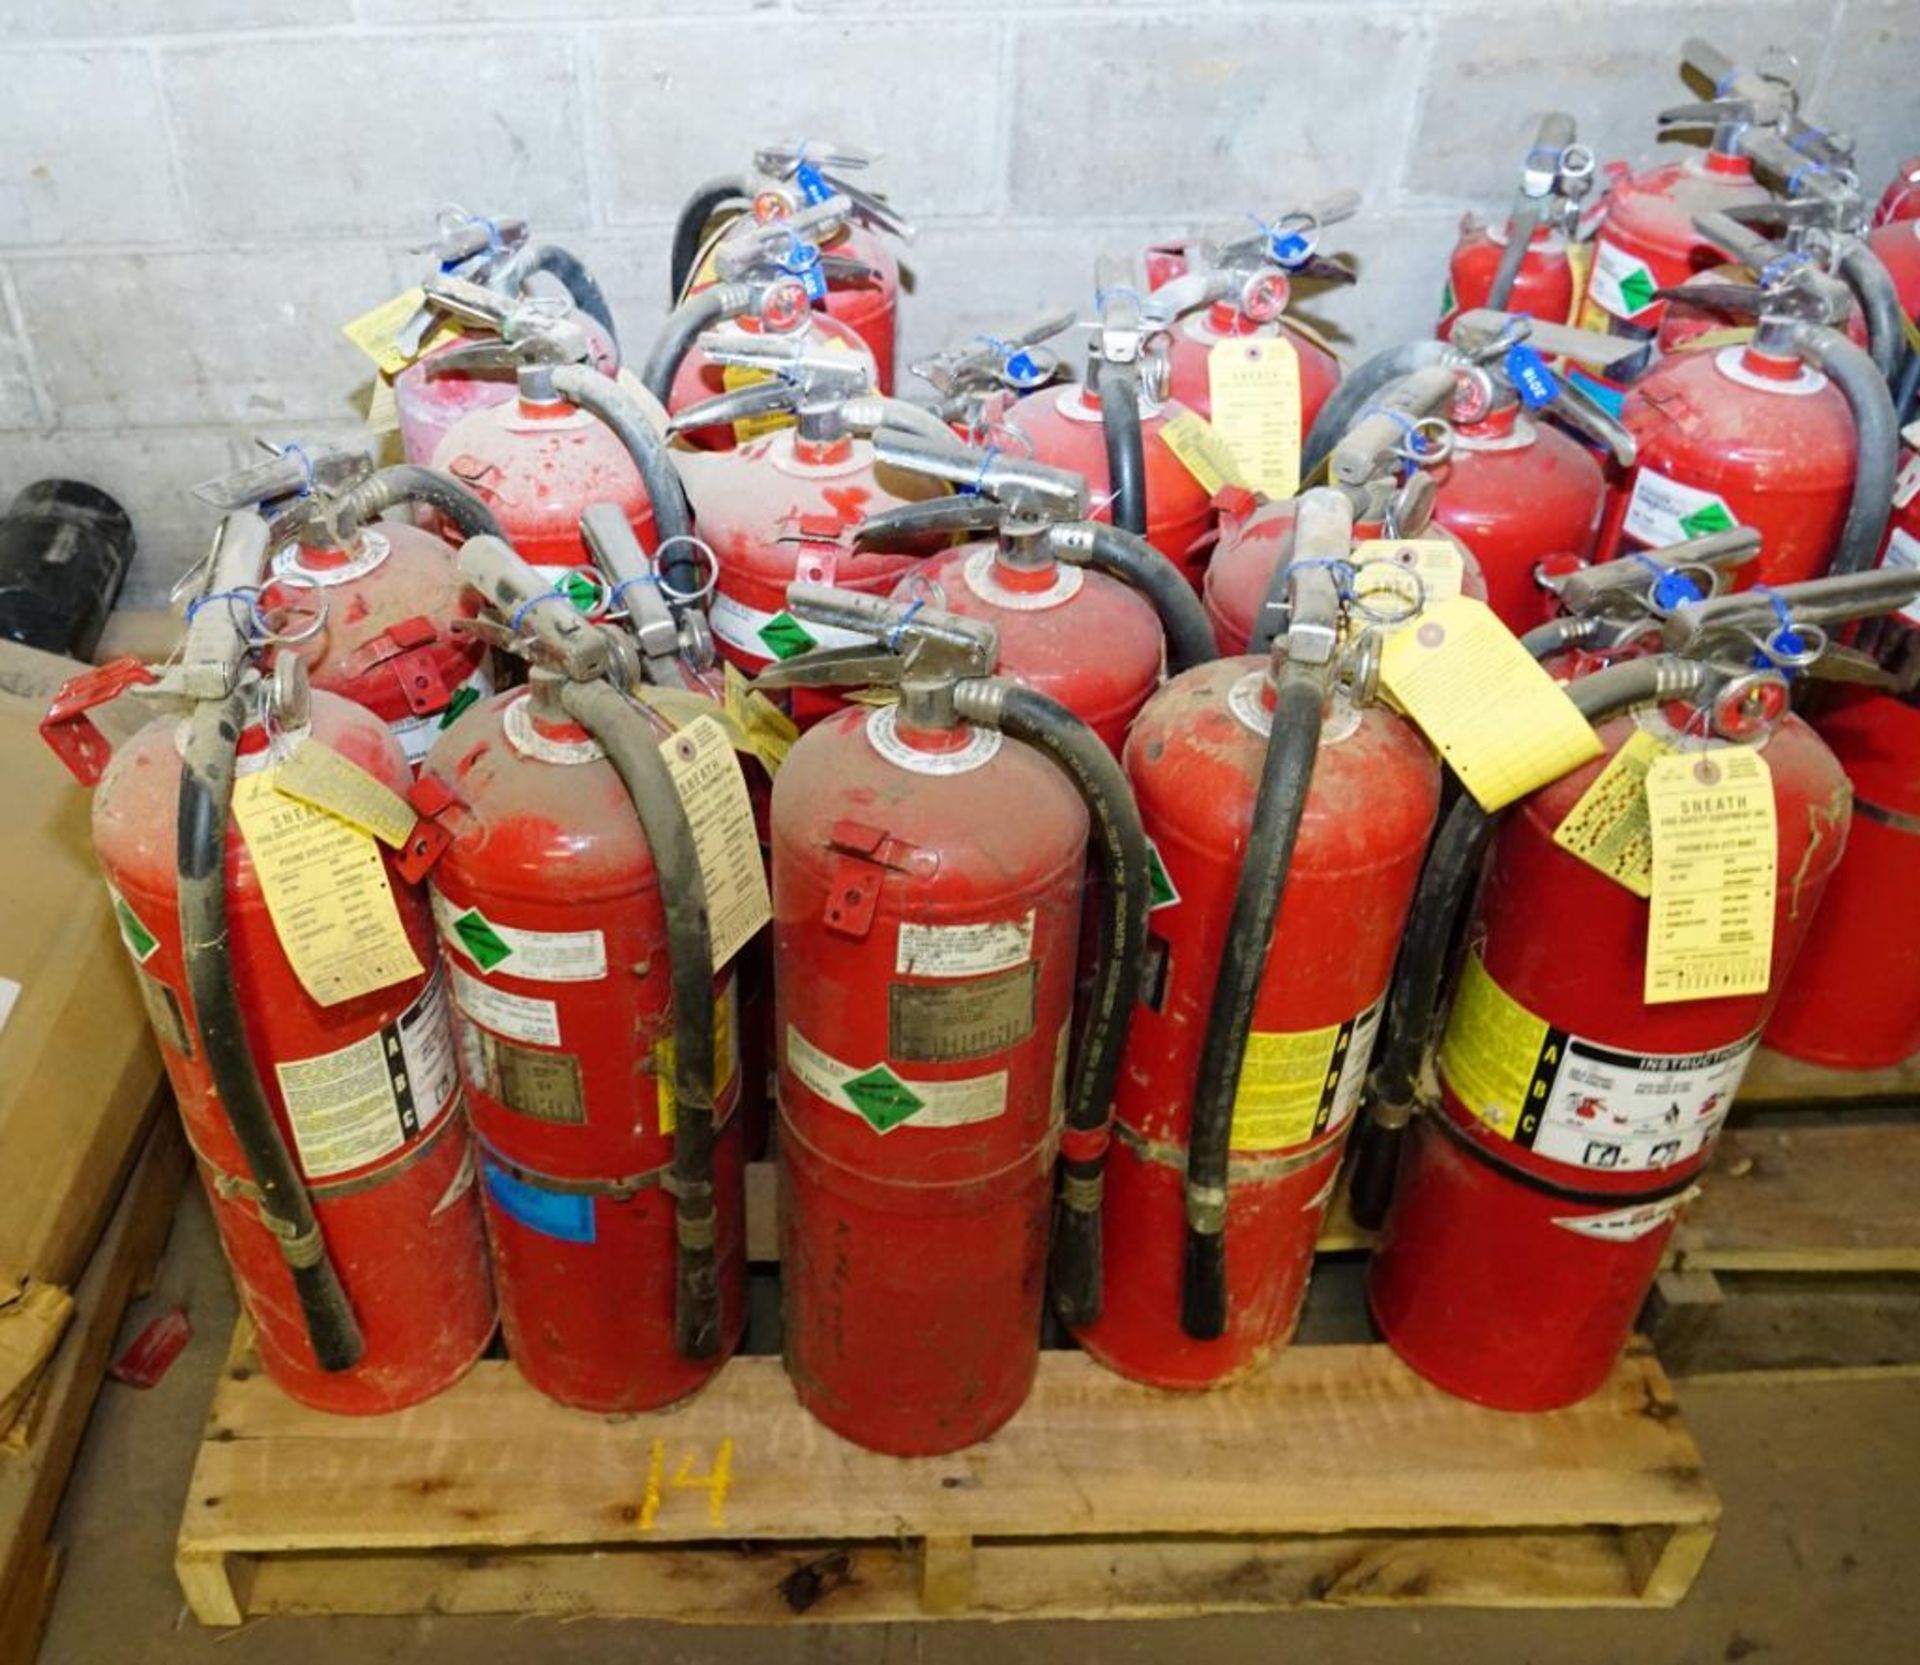 Skid of ABC Fire Extinguishers